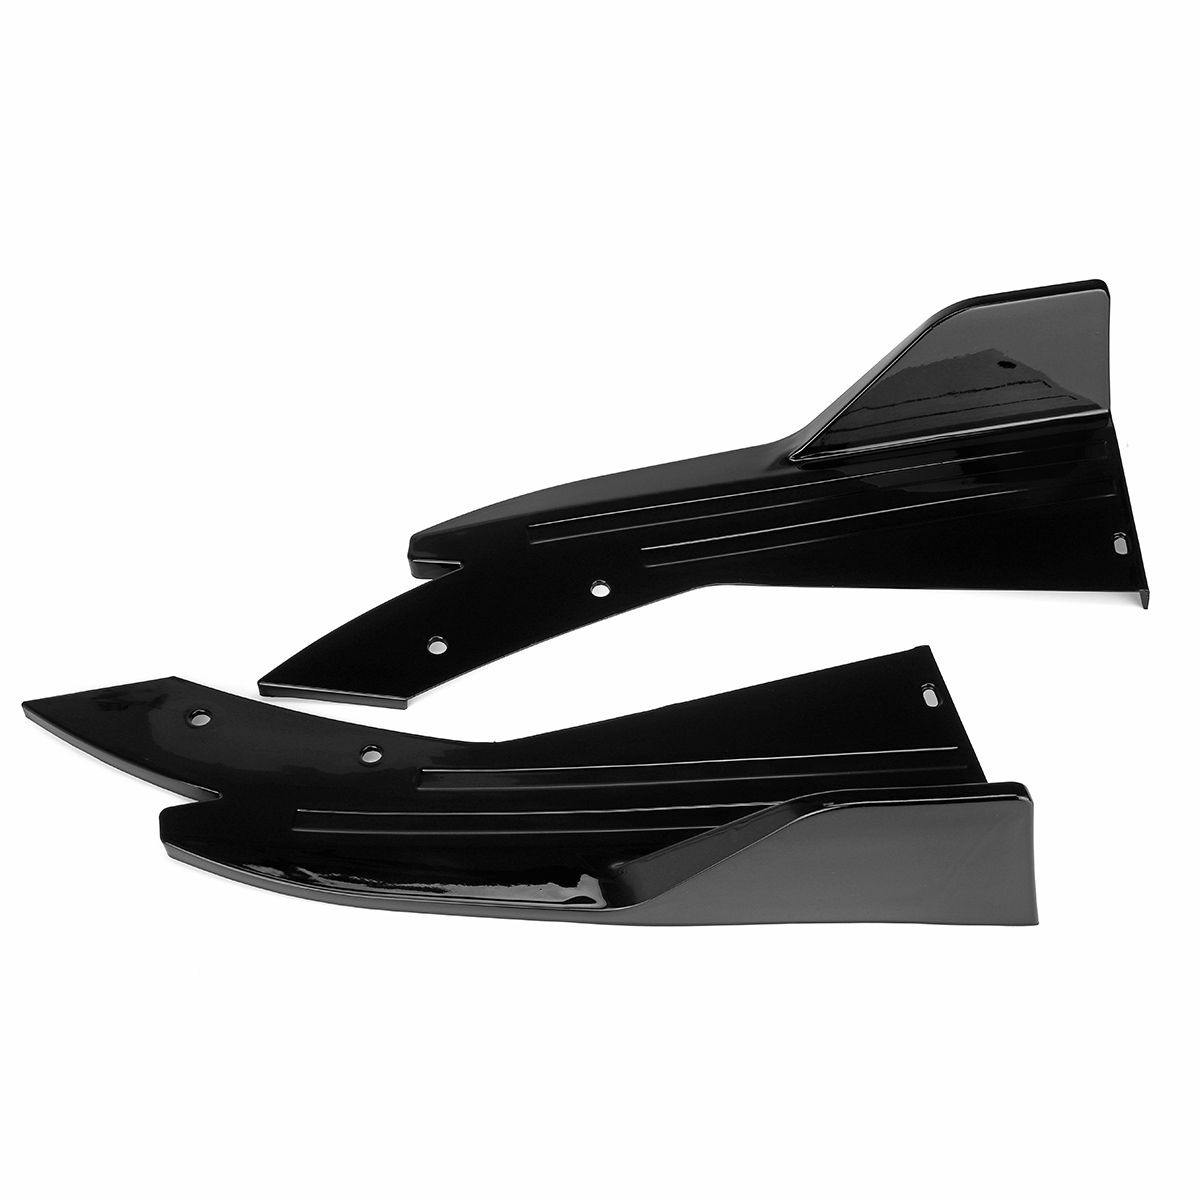 2Pcs-Universal-Anti-Scratch-Car-Rear-Bumper-Lip-Wrap-Angle-Splitters-Glossy-Black-1672578